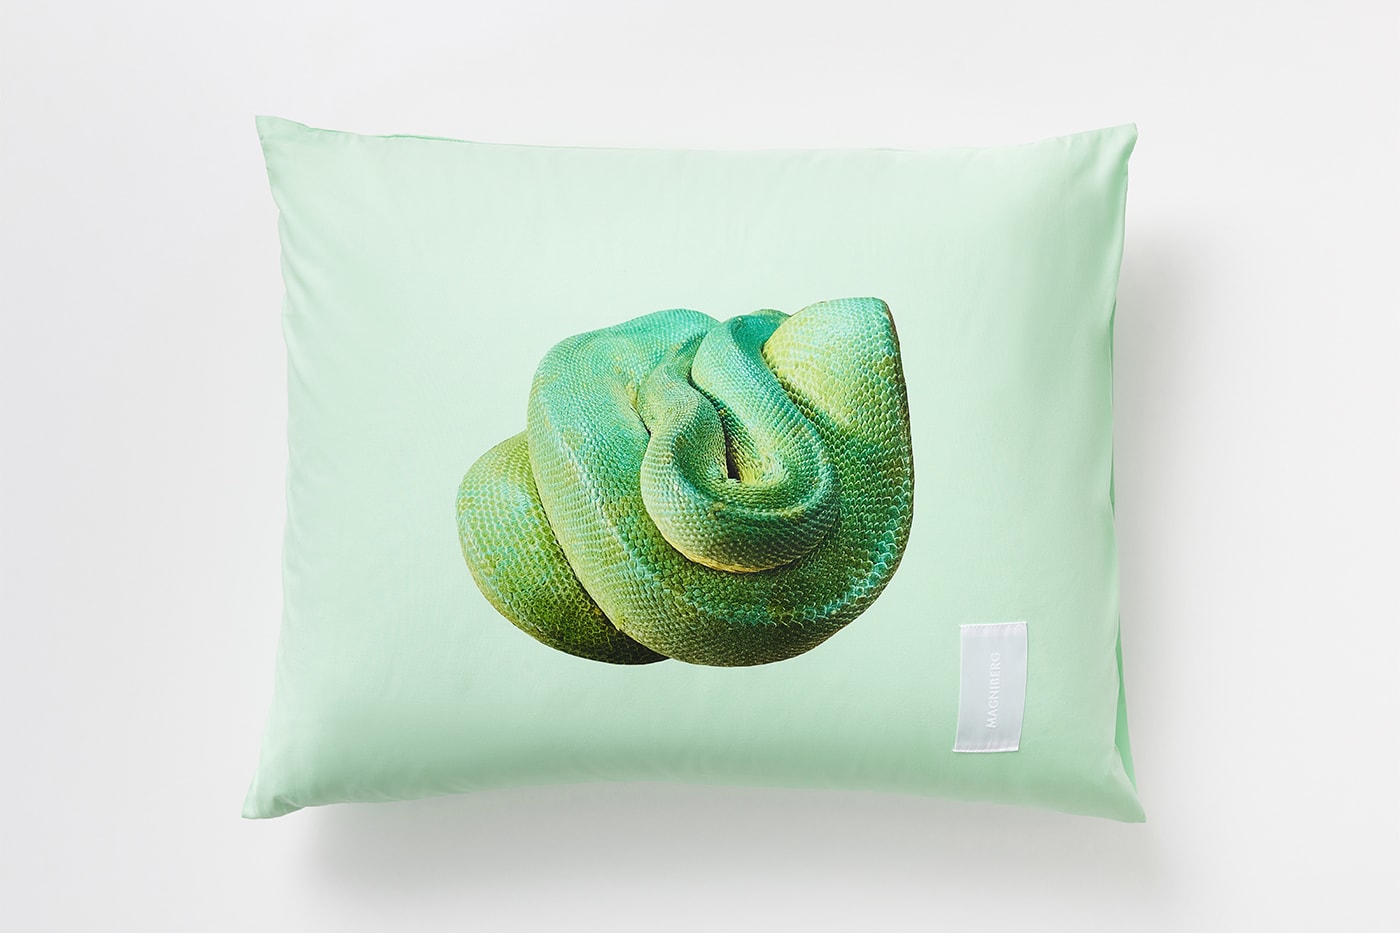 Magniberg Creates Pillows Based on Graphic Tee's